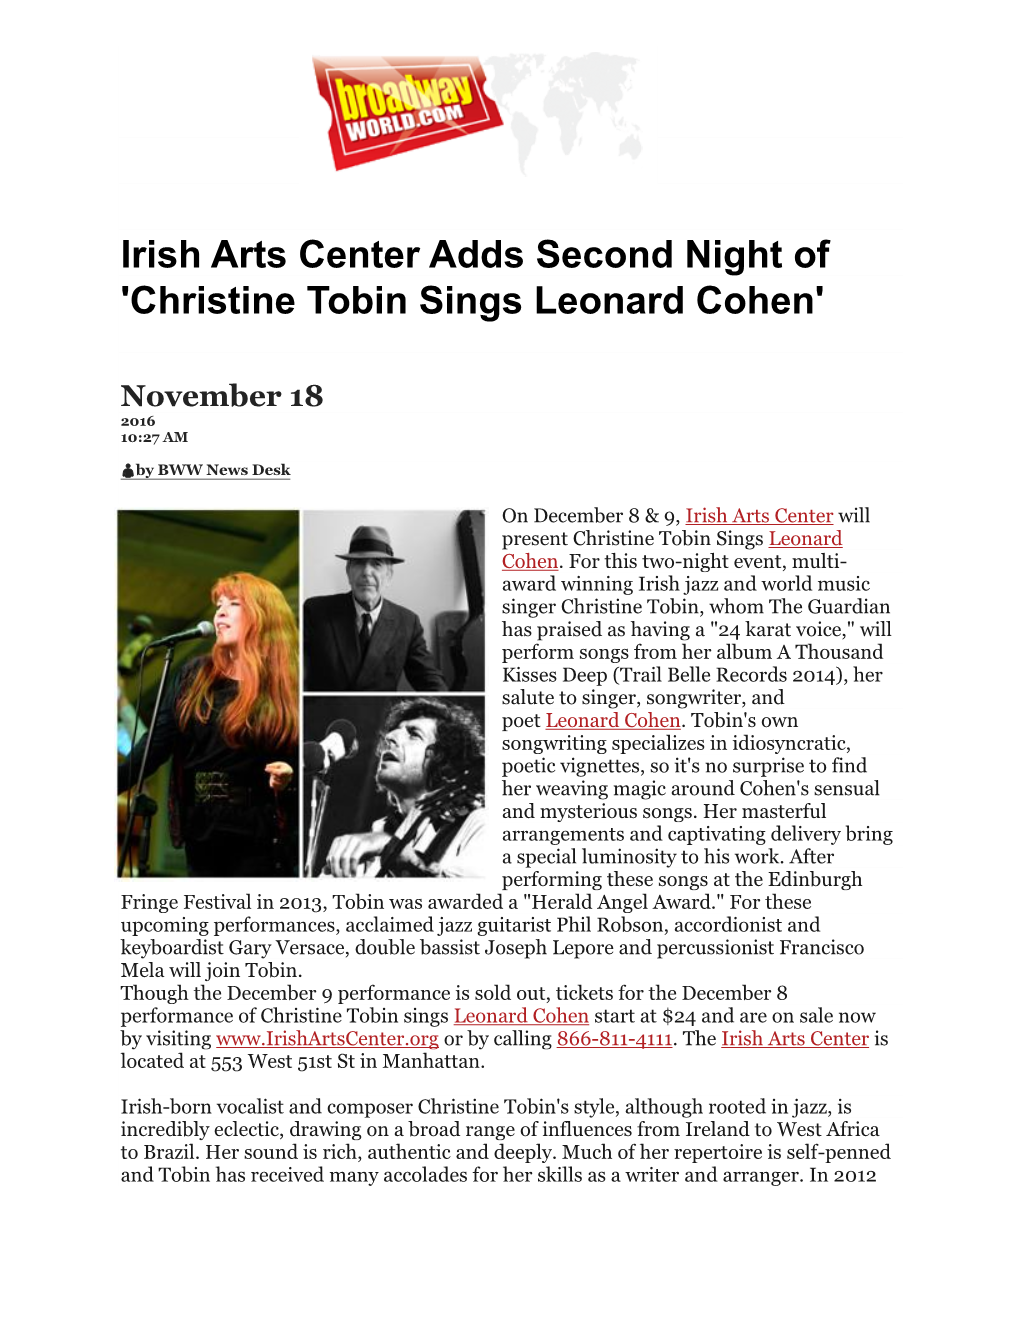 Irish Arts Center Adds Second Night of 'Christine Tobin Sings Leonard Cohen'